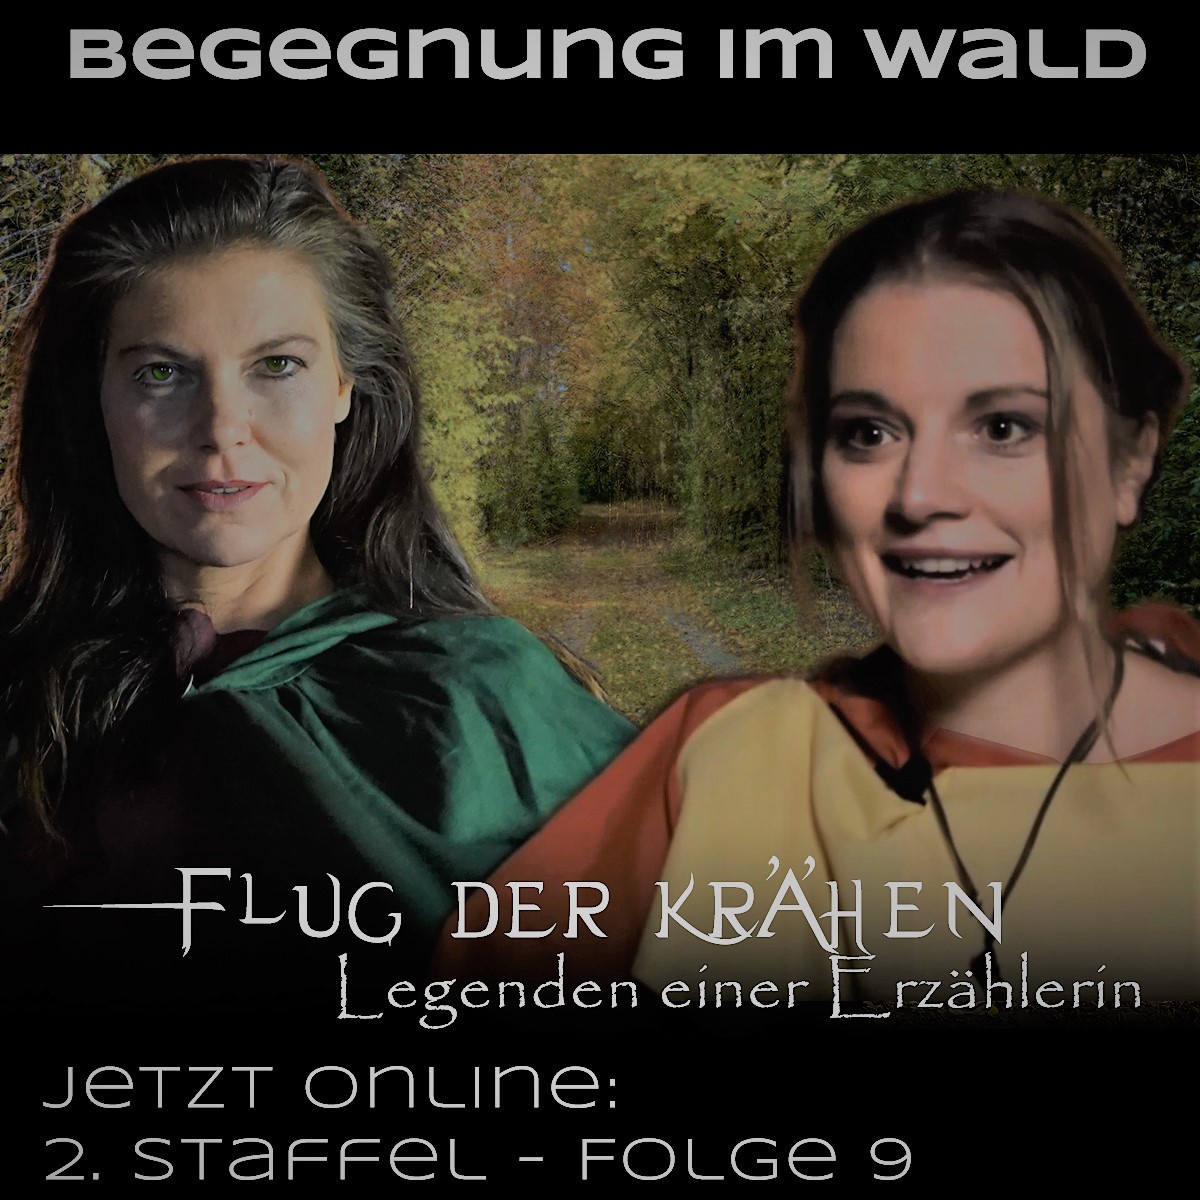 Begegnung im Wald (Season 2 Folge 9)